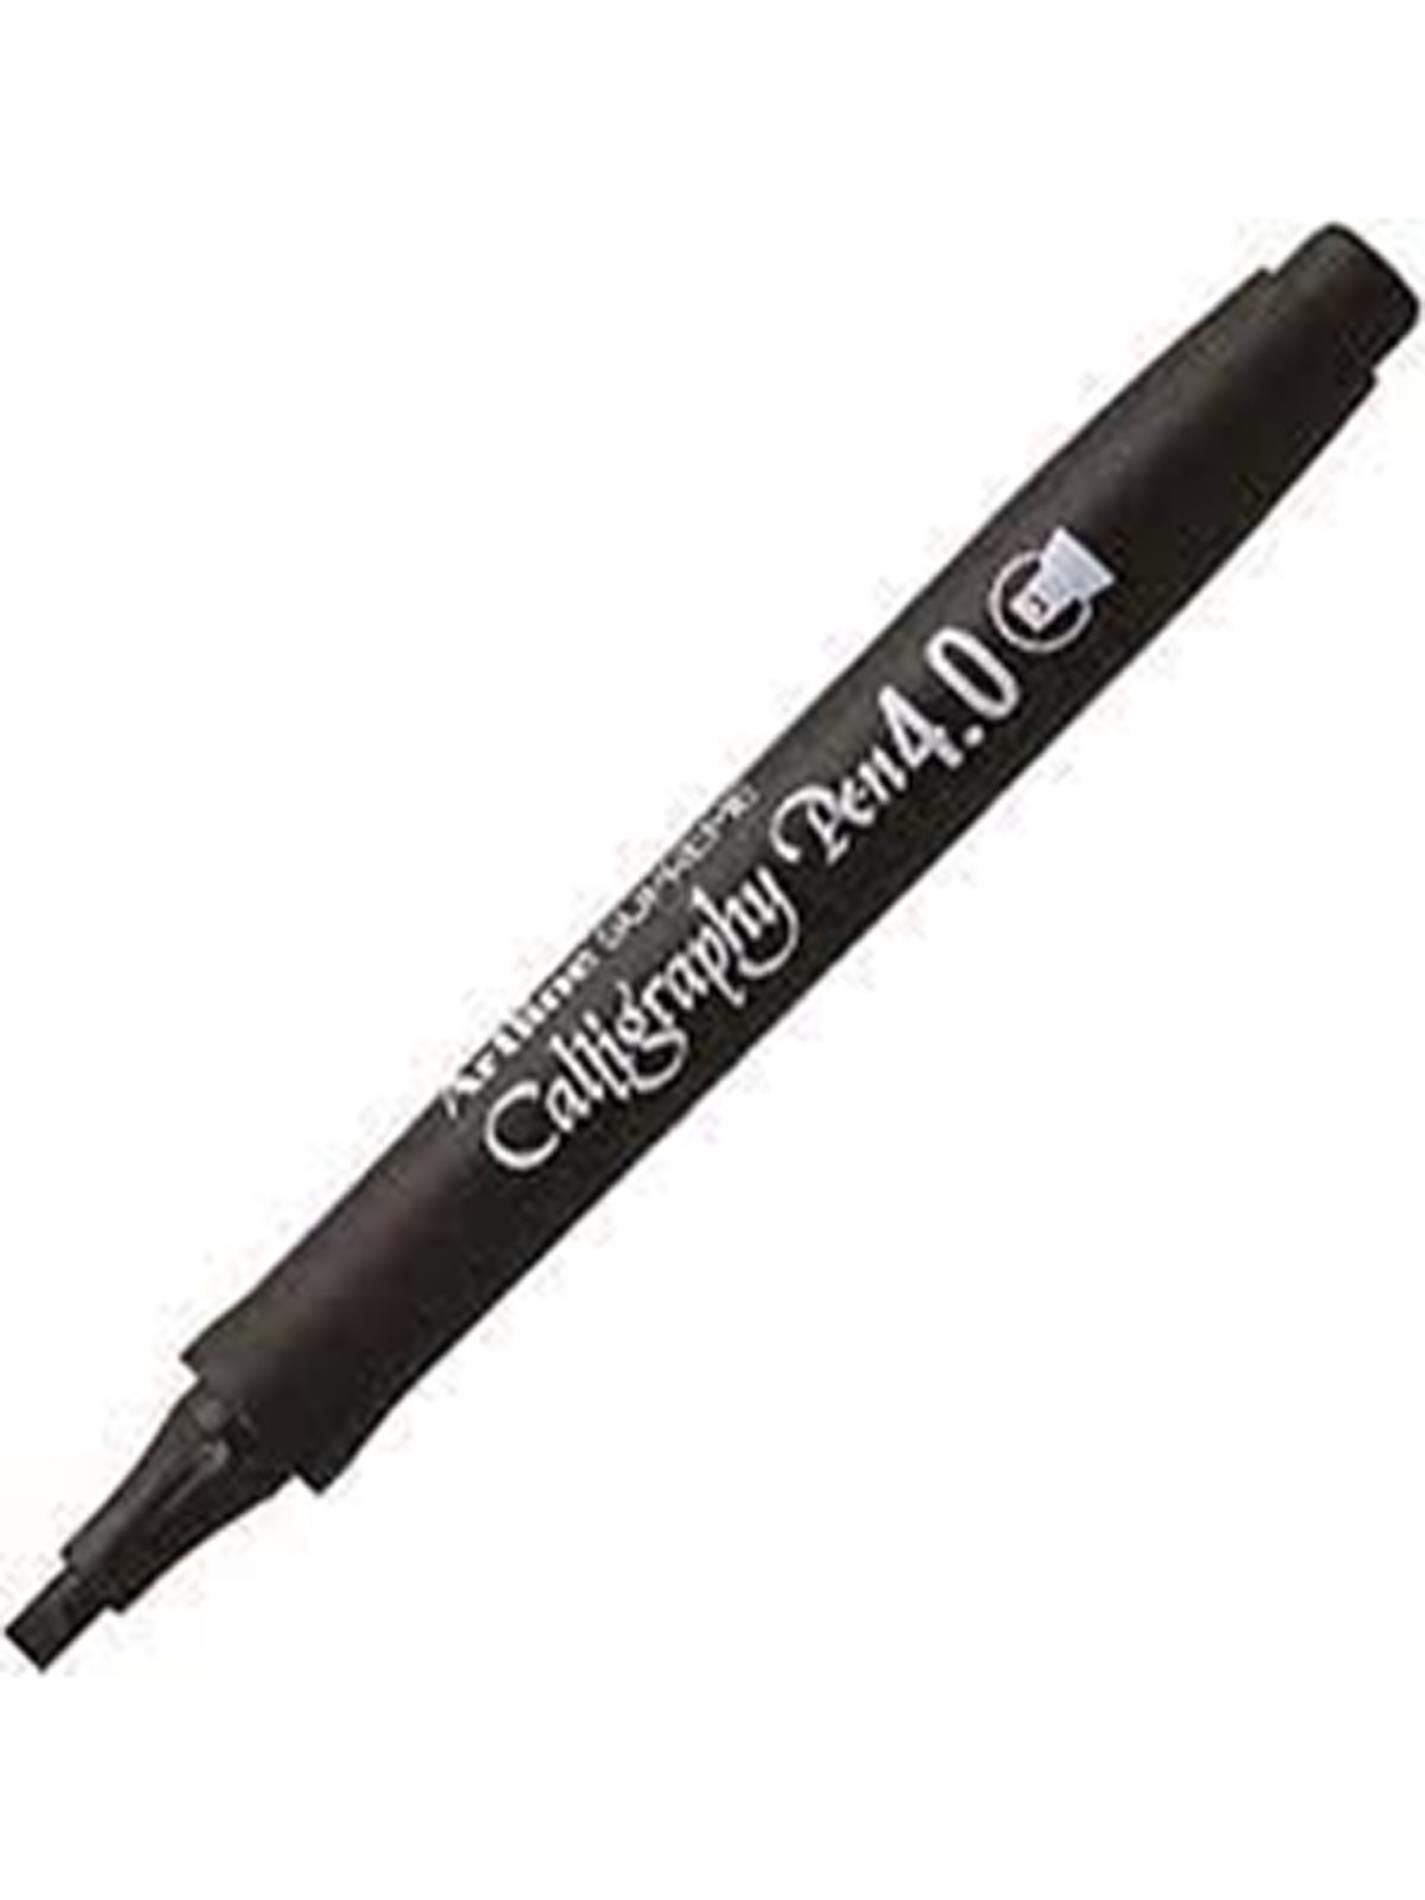 Artline Supreme Caligrapy Pen 4.0 Kaligrafi Kalemi Uç 4,0mm Siyah (1 Adet)